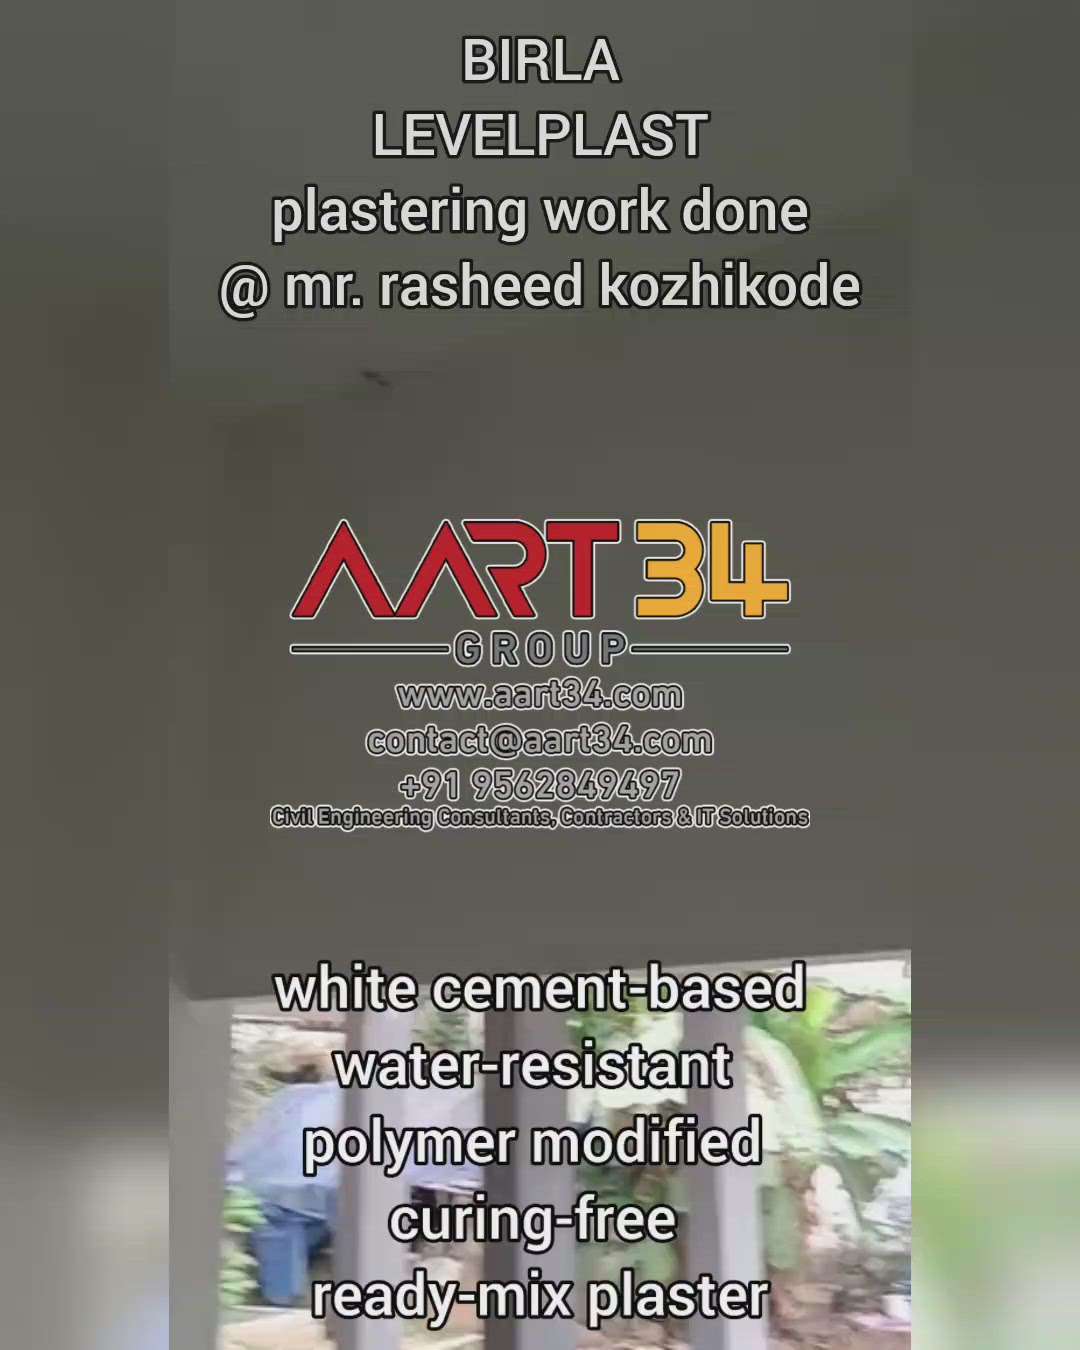 BIRLA LEVELPLAST plastering work done @ mr. rasheed kozhikode
contact us
AART34 GROUP
www.aart34.com
9562849497